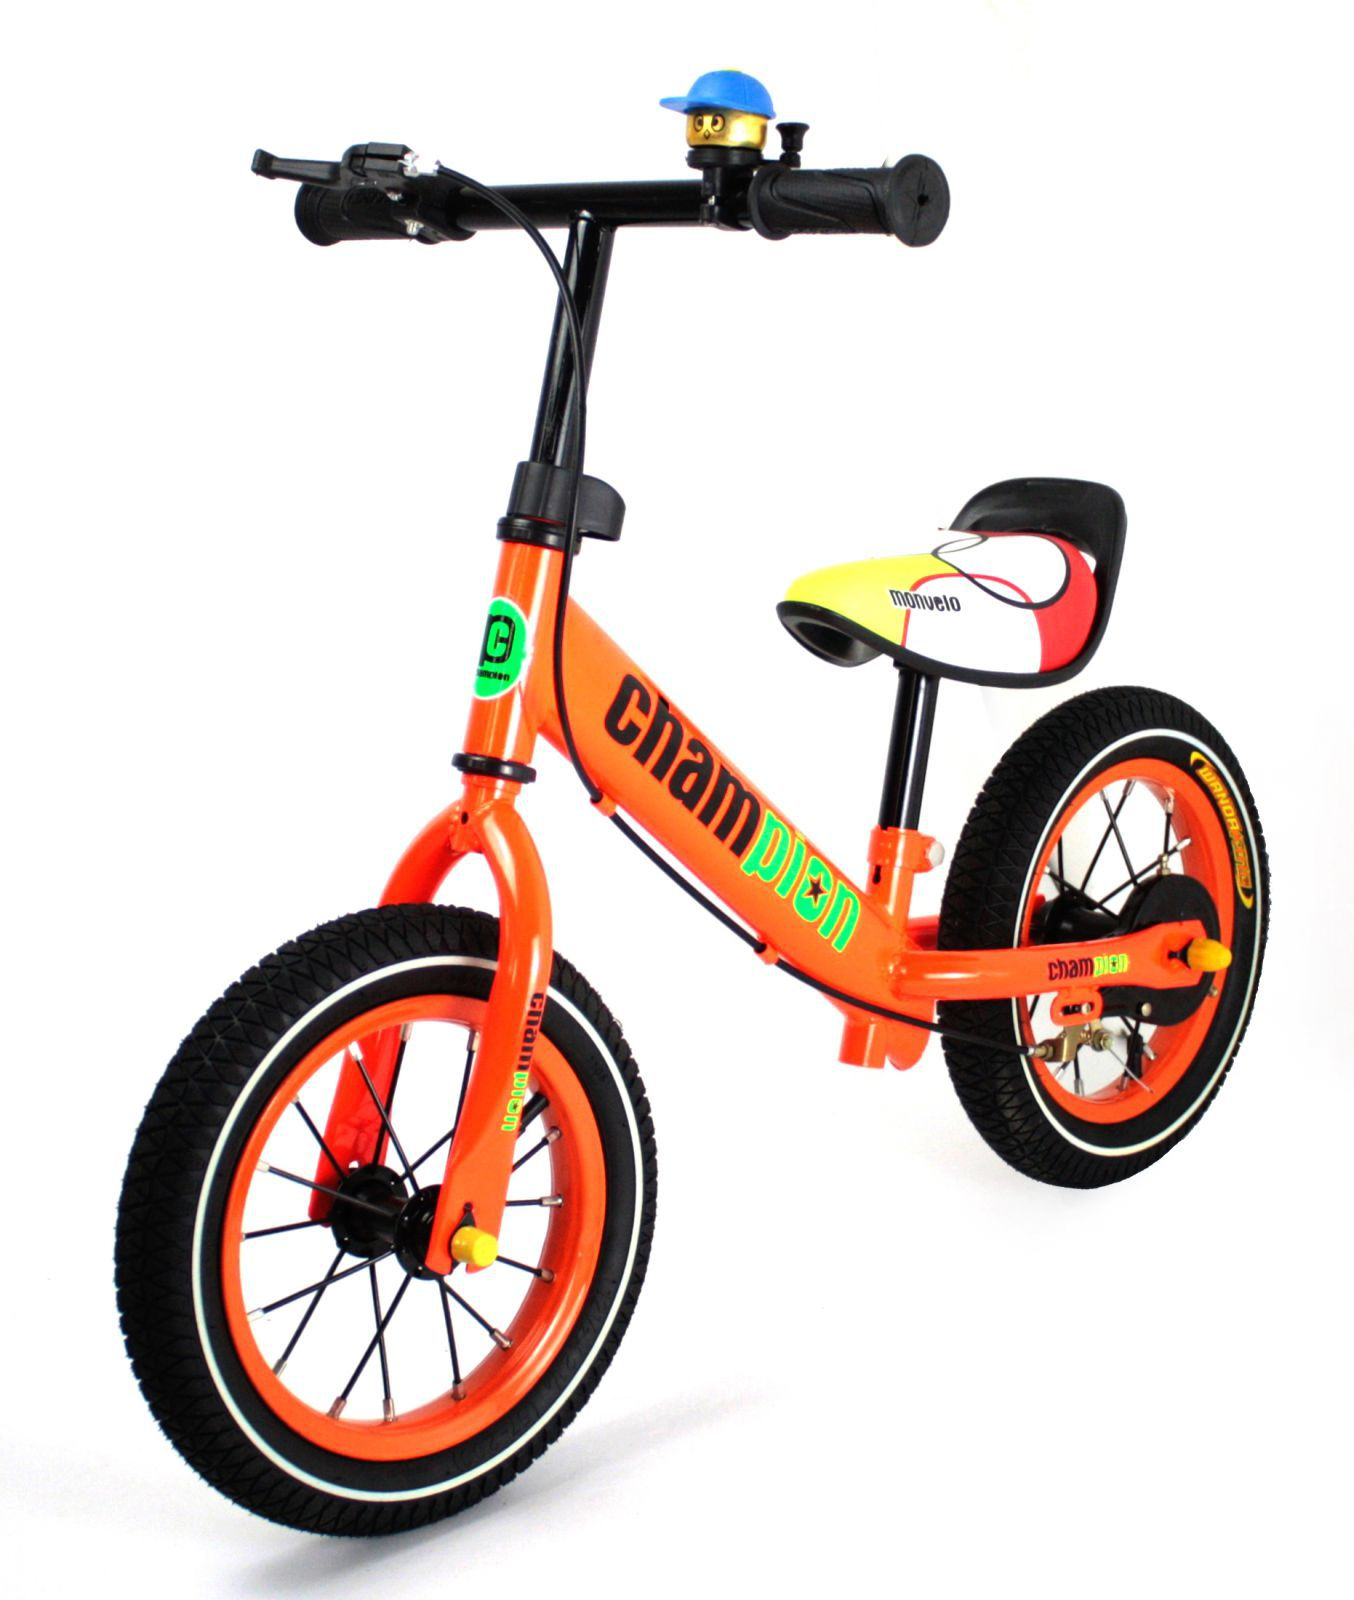 In stock Most beautiful children's assembled metal balance bike Champion with wire wheels scoot1Comporange orange